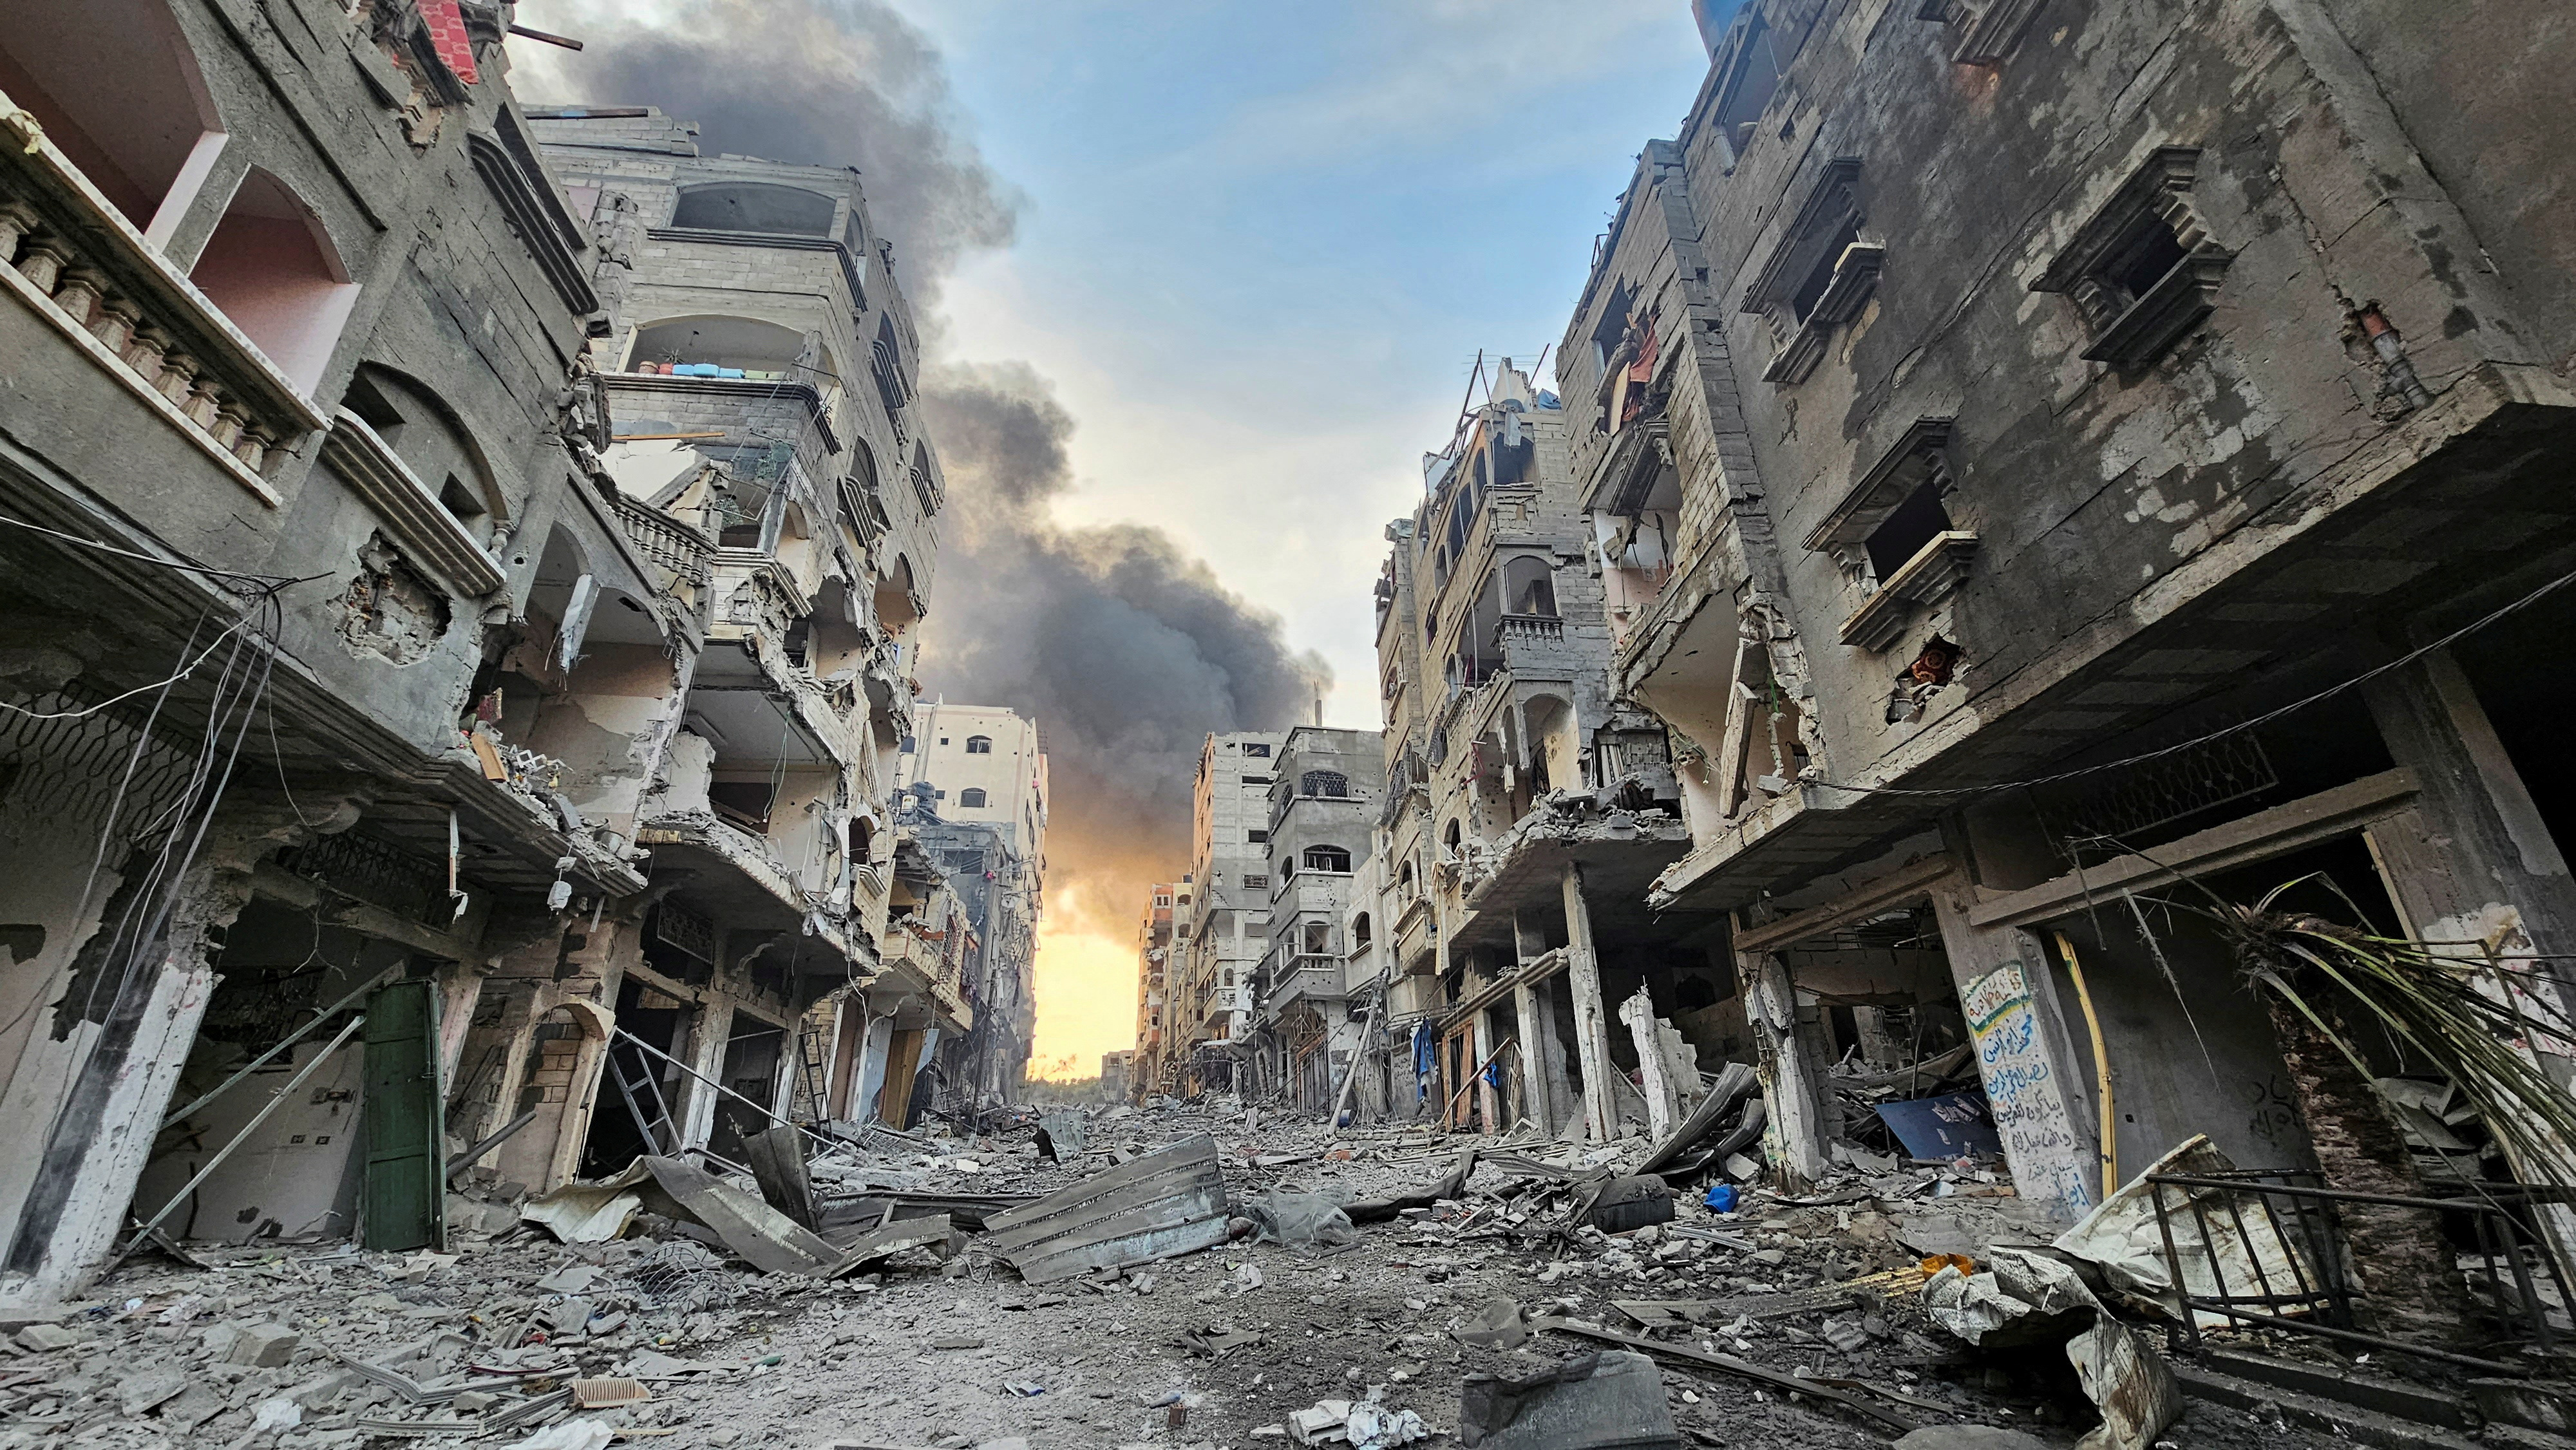 image Gaza bombing has caused major environmental damage, UN says